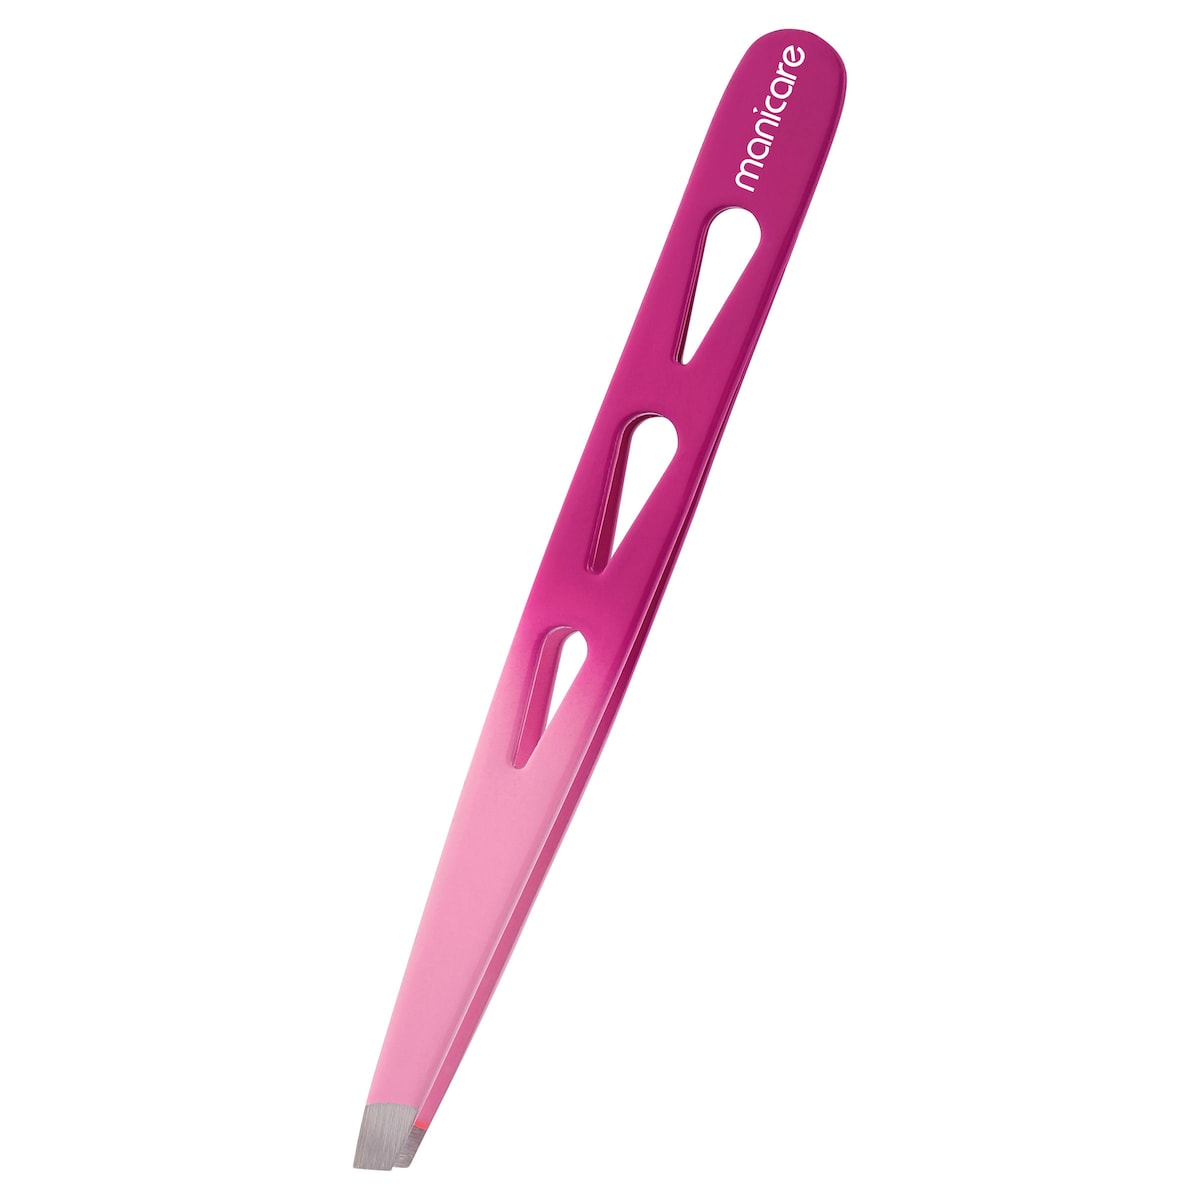 Manicare Tweezers Precision Pink 1 Pack